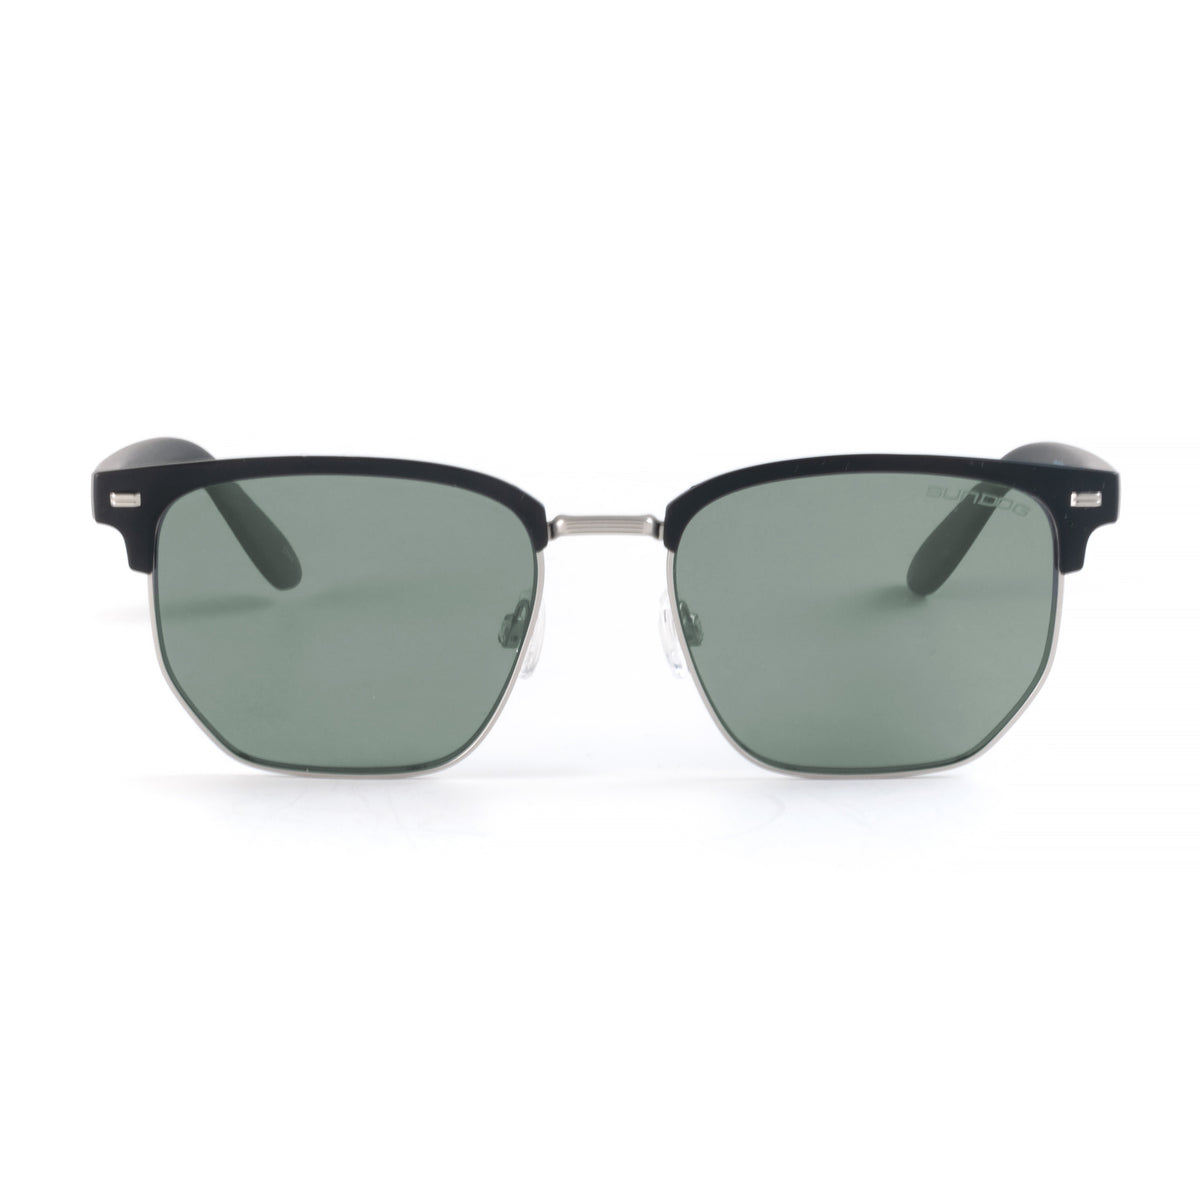 Sundog Golf Sunglasses Designed For Clearer Vision And Maximum Comfort